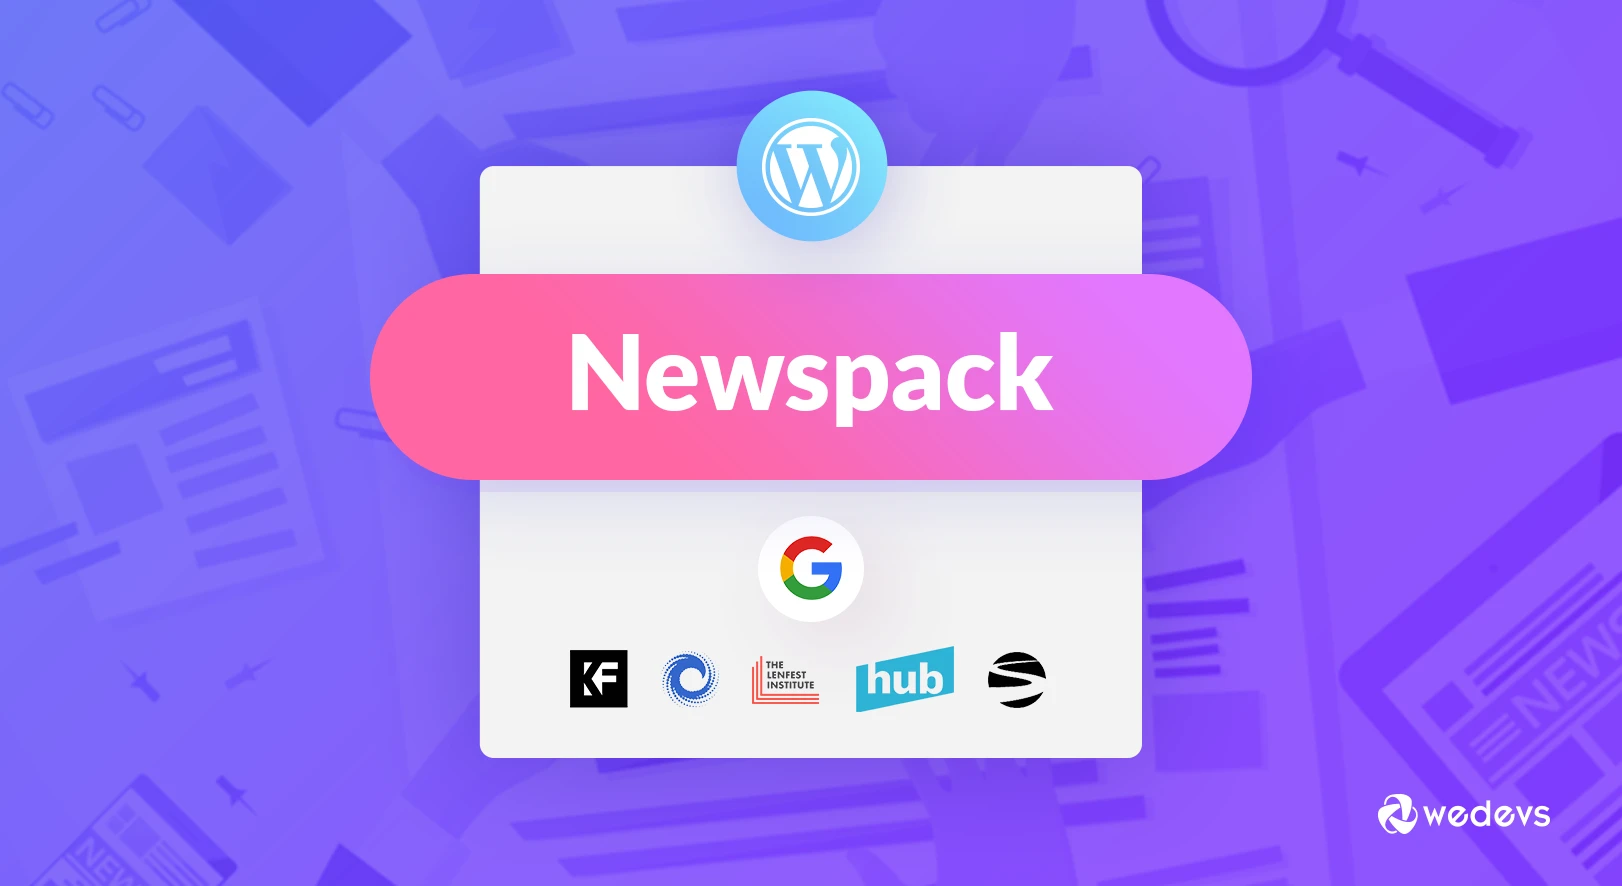 WordPress Partnering with Google to Develop a News Publishing Hub &#8216;Newspack&#8217;